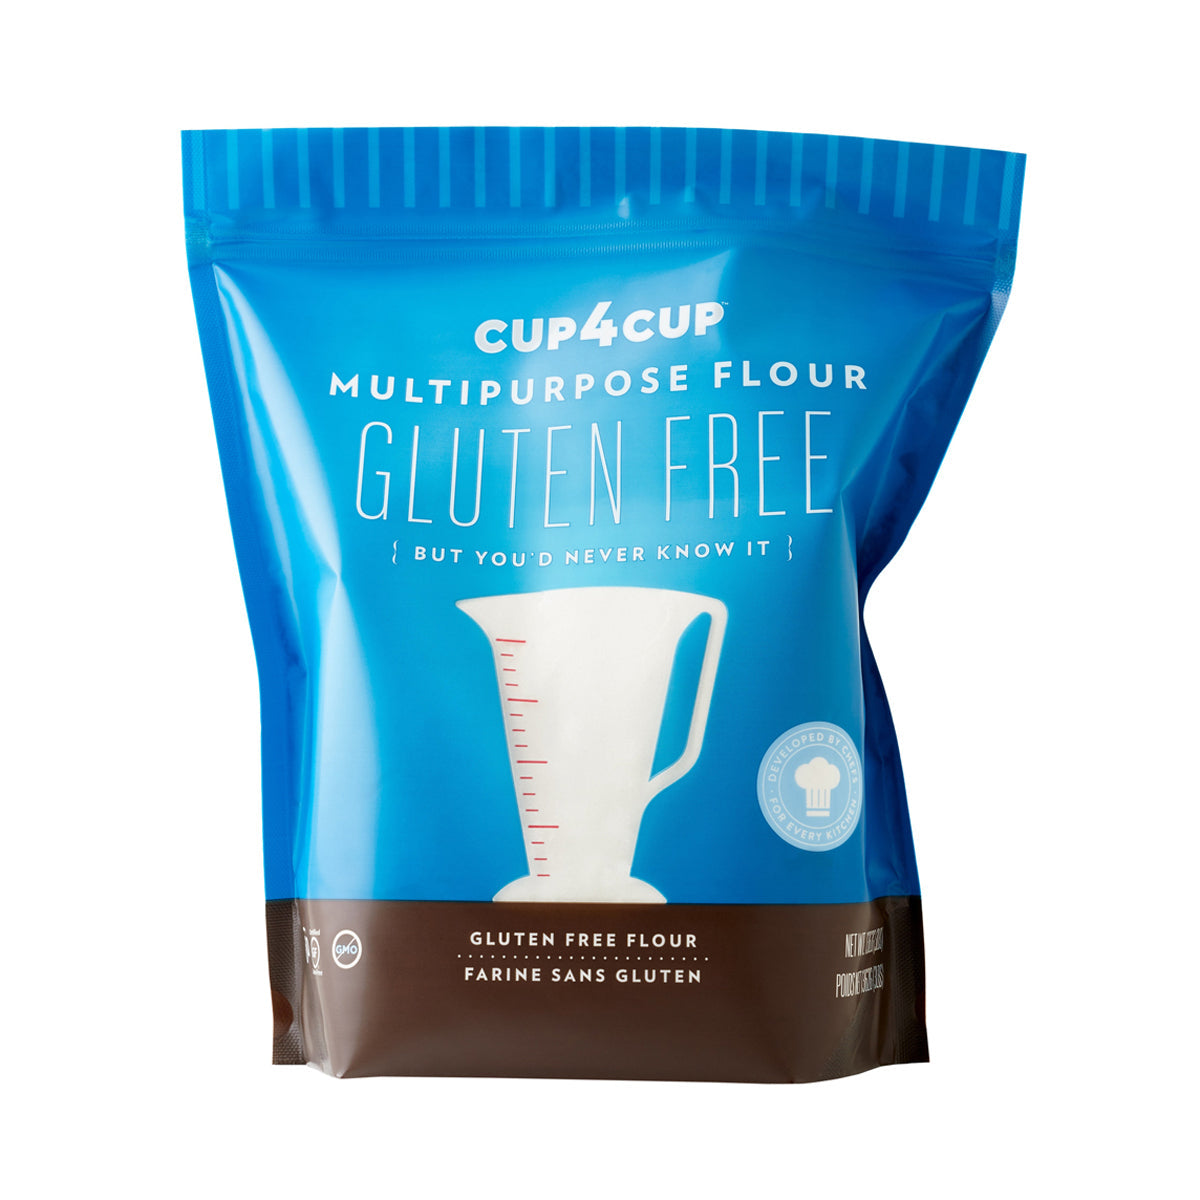 Cup4Cup Gluten Free Multipurpose Flour